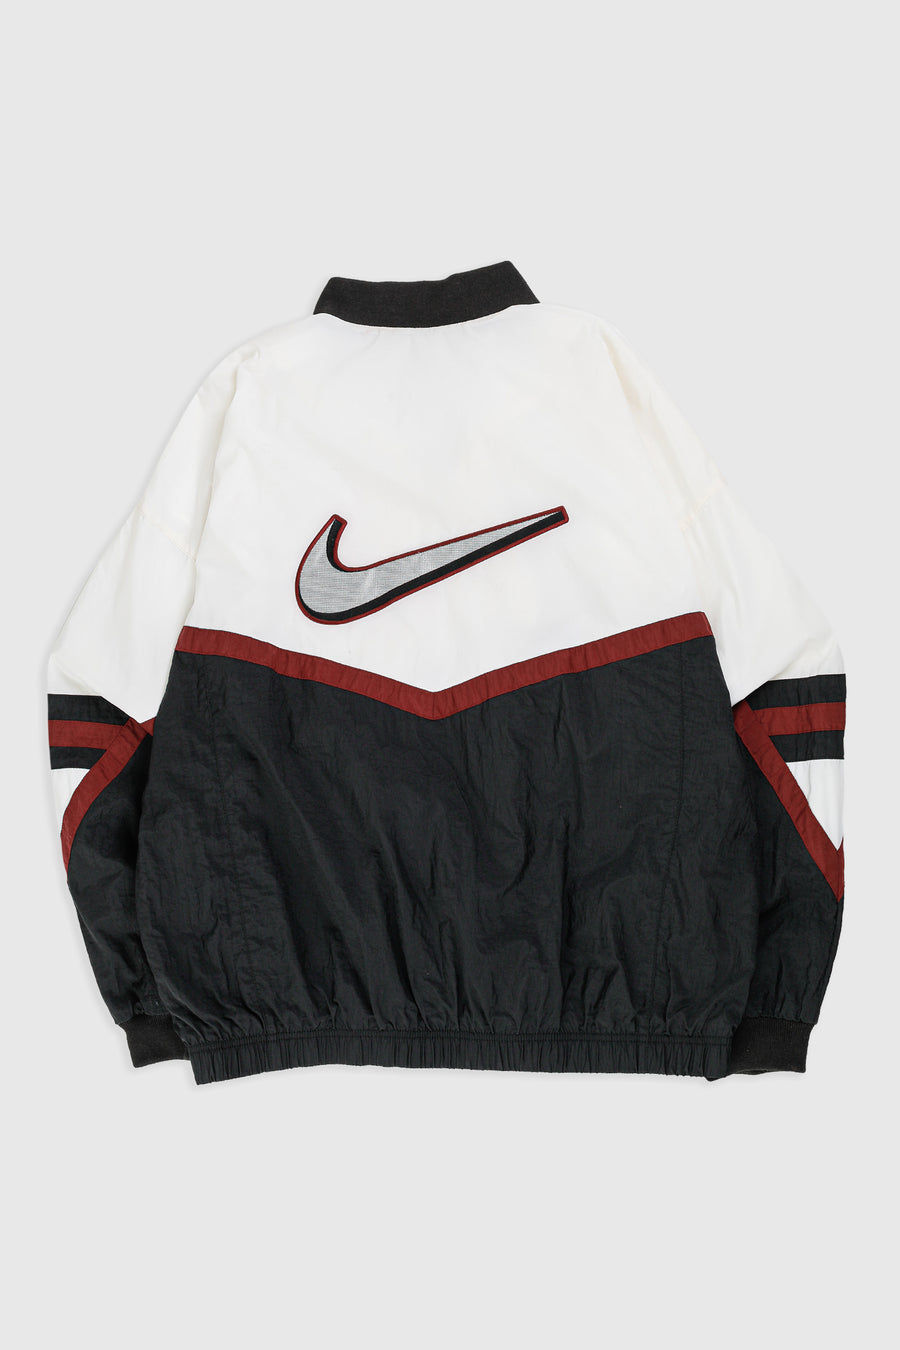 Vintage Nike Pullover Windbreaker Jacket - L